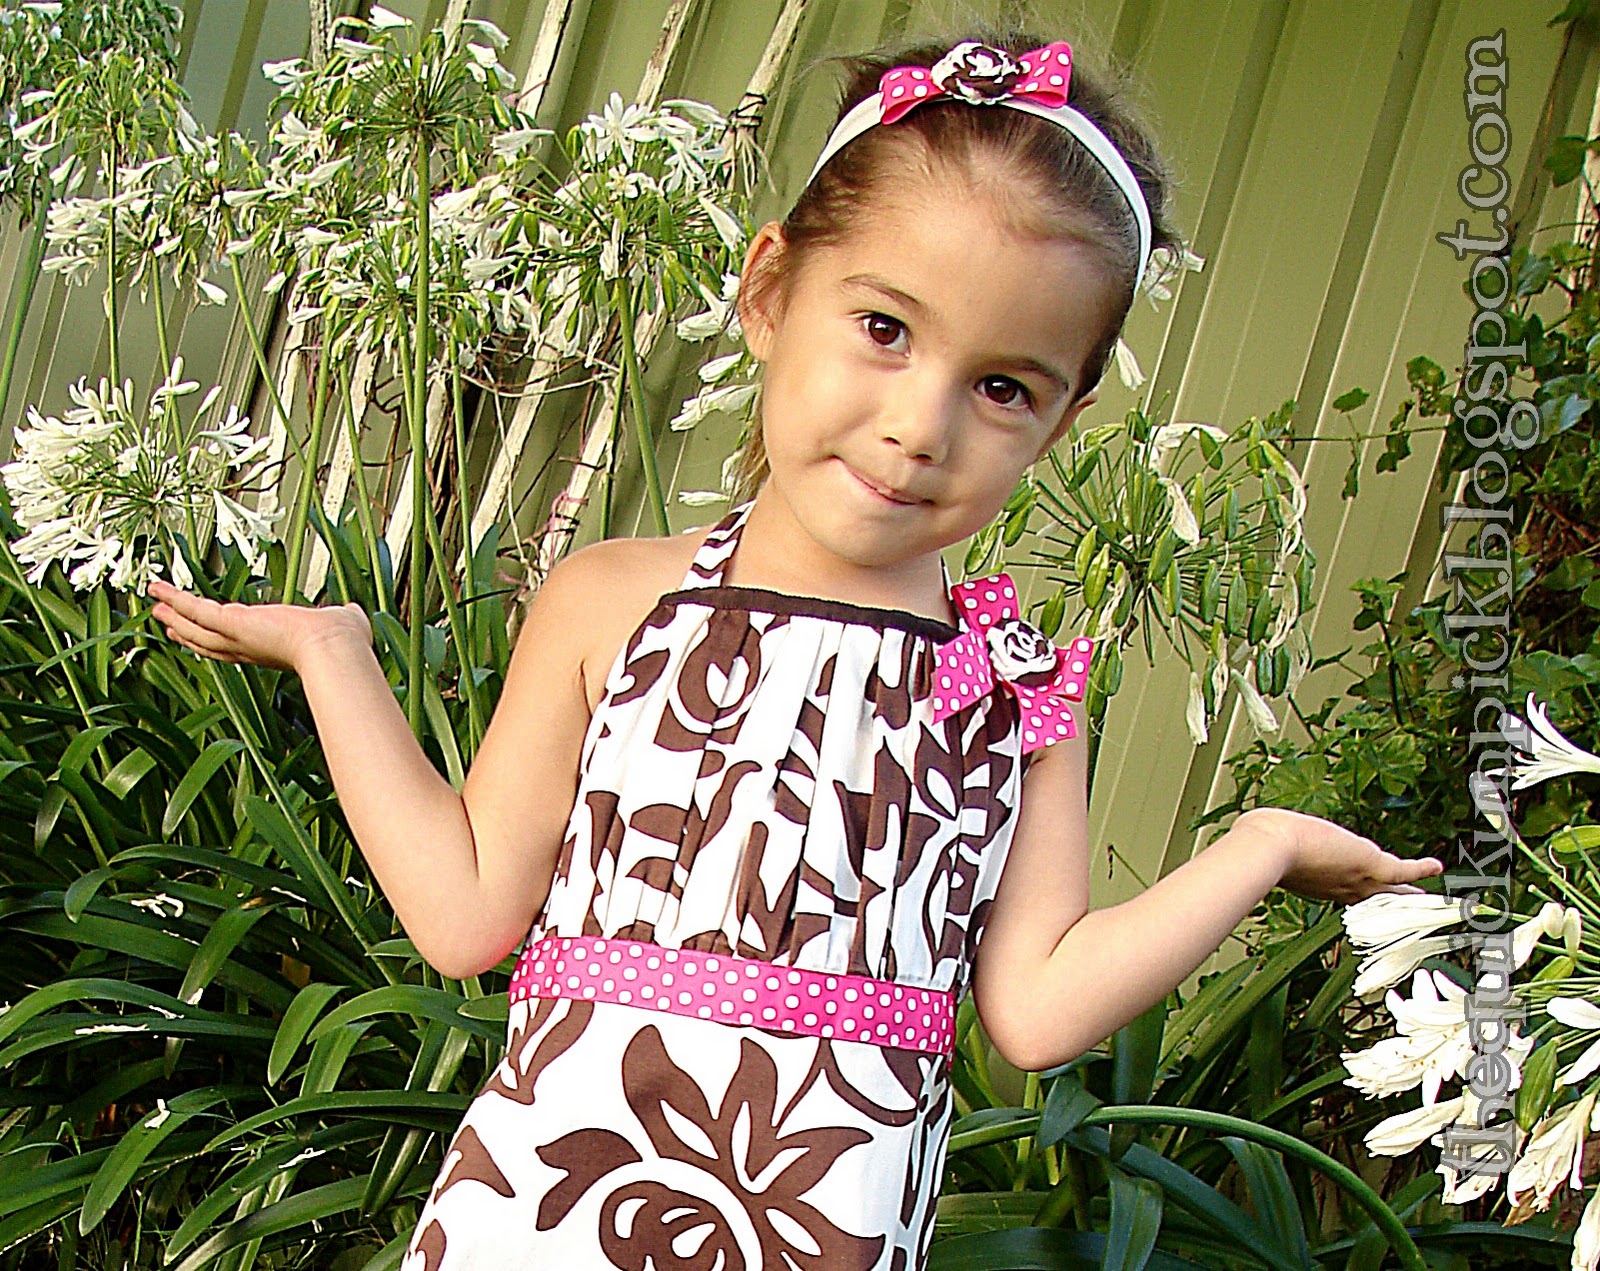 The Quick Unpick: TUTORIAL: Brown Sugar Skirt Refashion to Toddler Dress